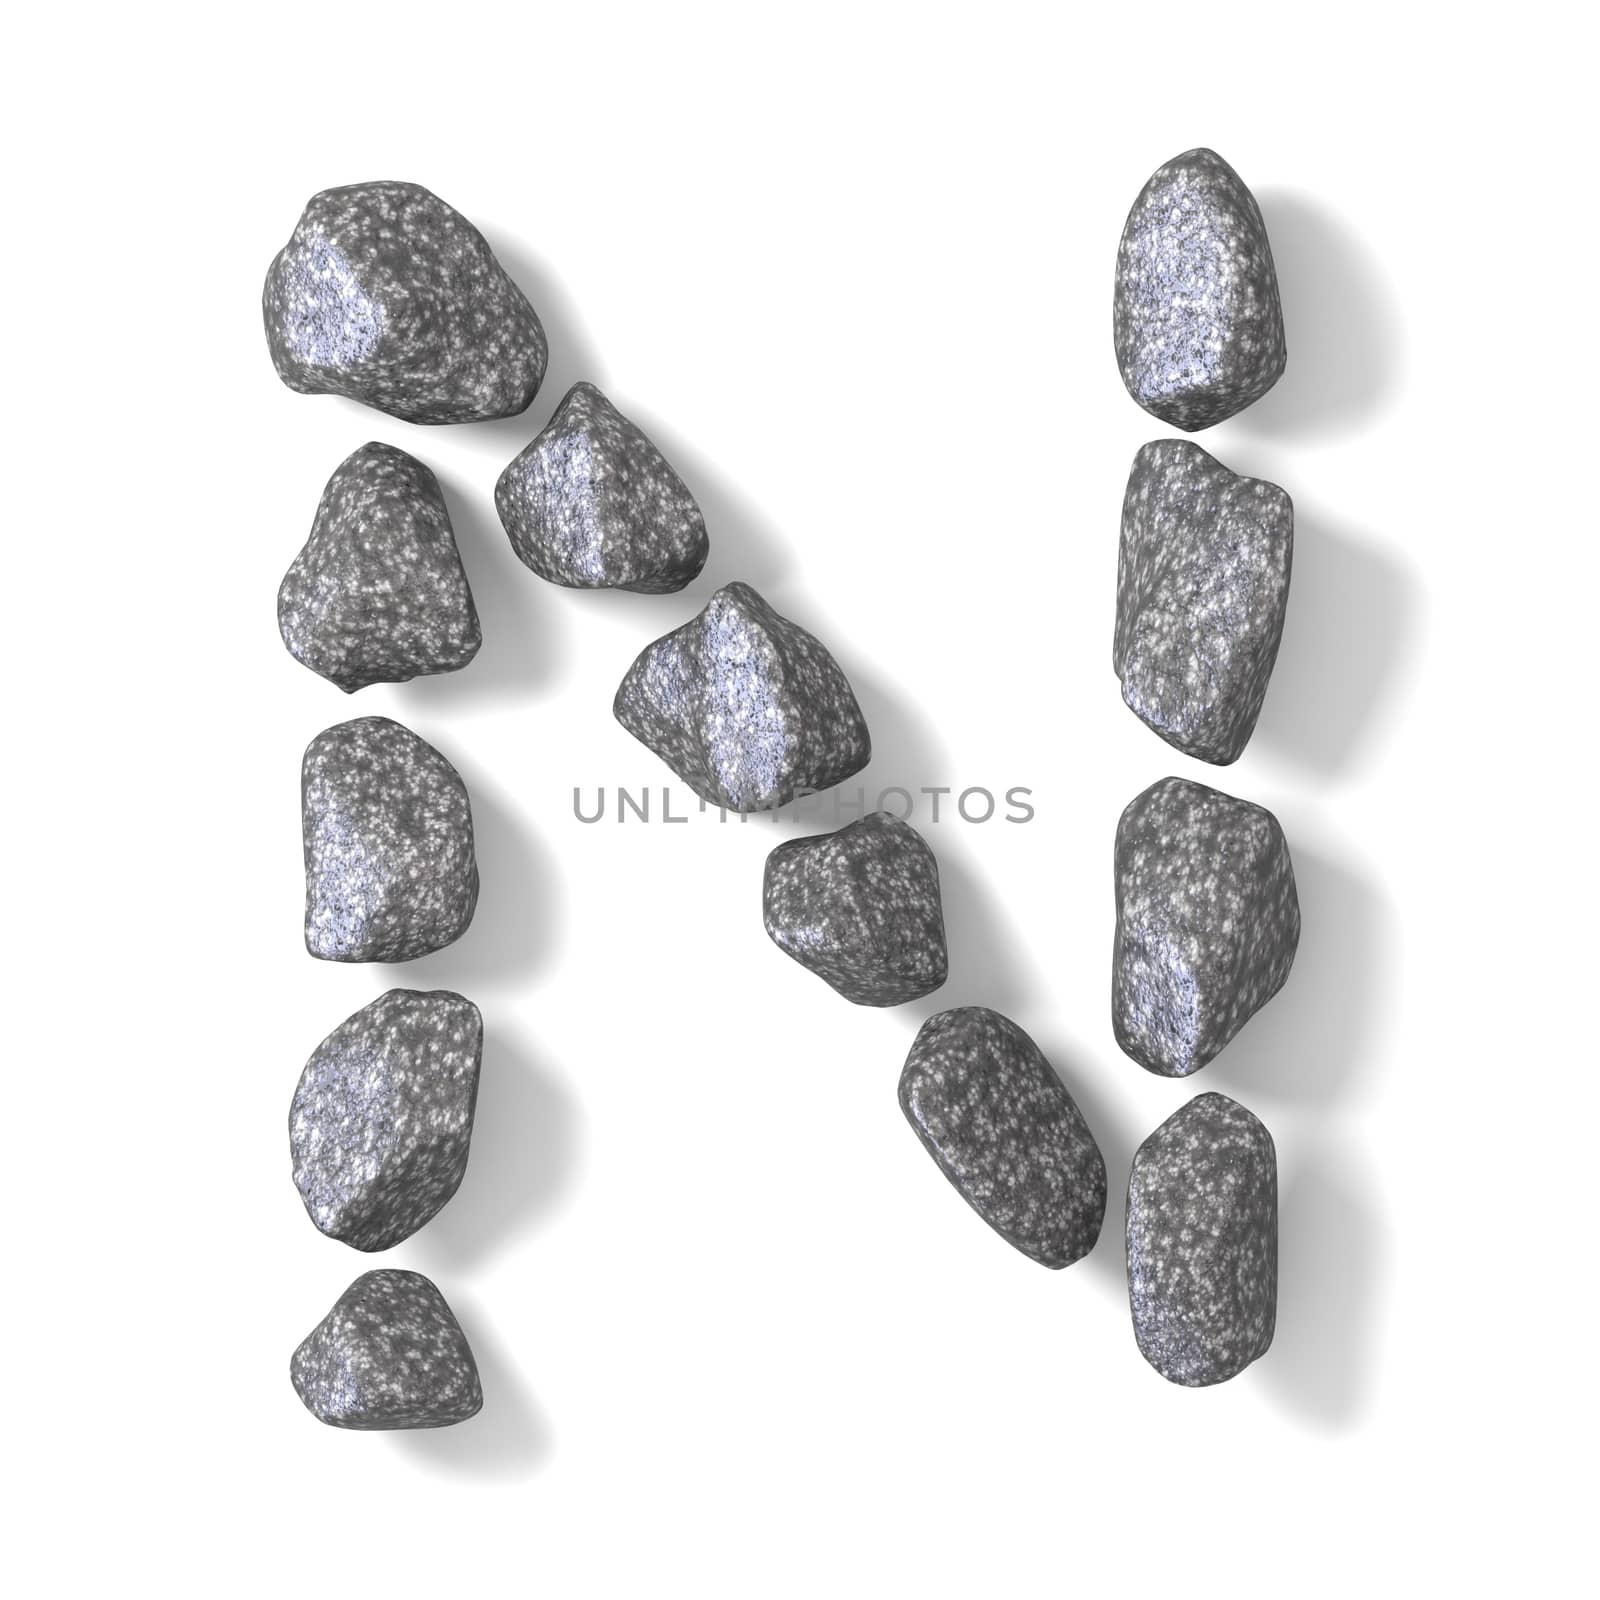 Font made of rocks LETTER N 3D render illustration isolated on white background